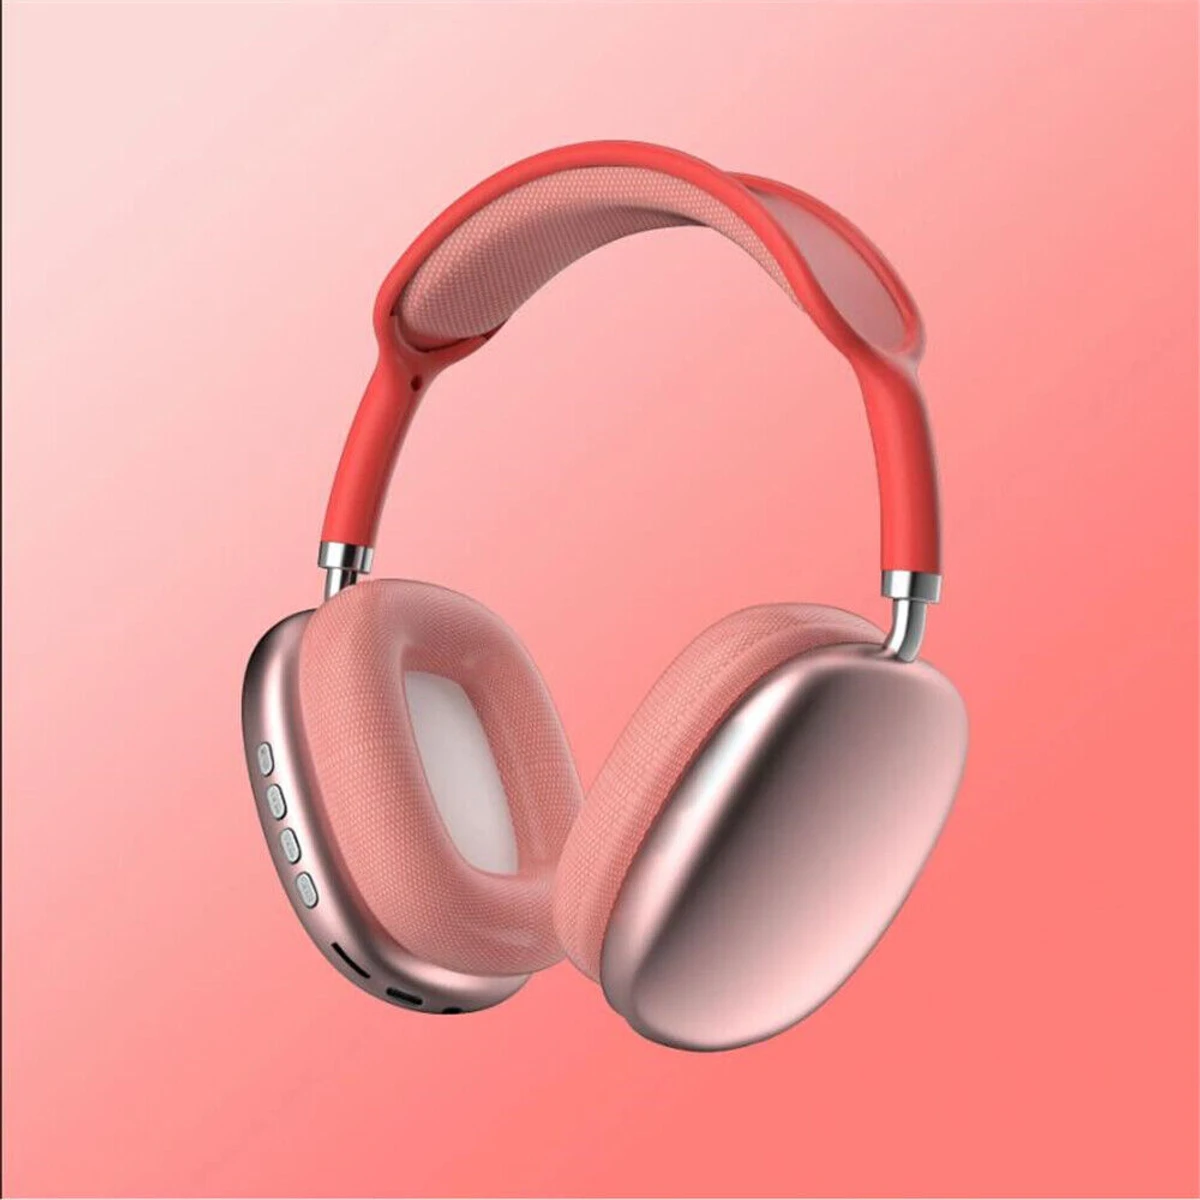 P9 Pro max Wireless Bluetooth Headphones ছবিতে দেয়া কালারগুলো এভেলেবেল আছে ( কোন কালার নোট এ লিখুন )